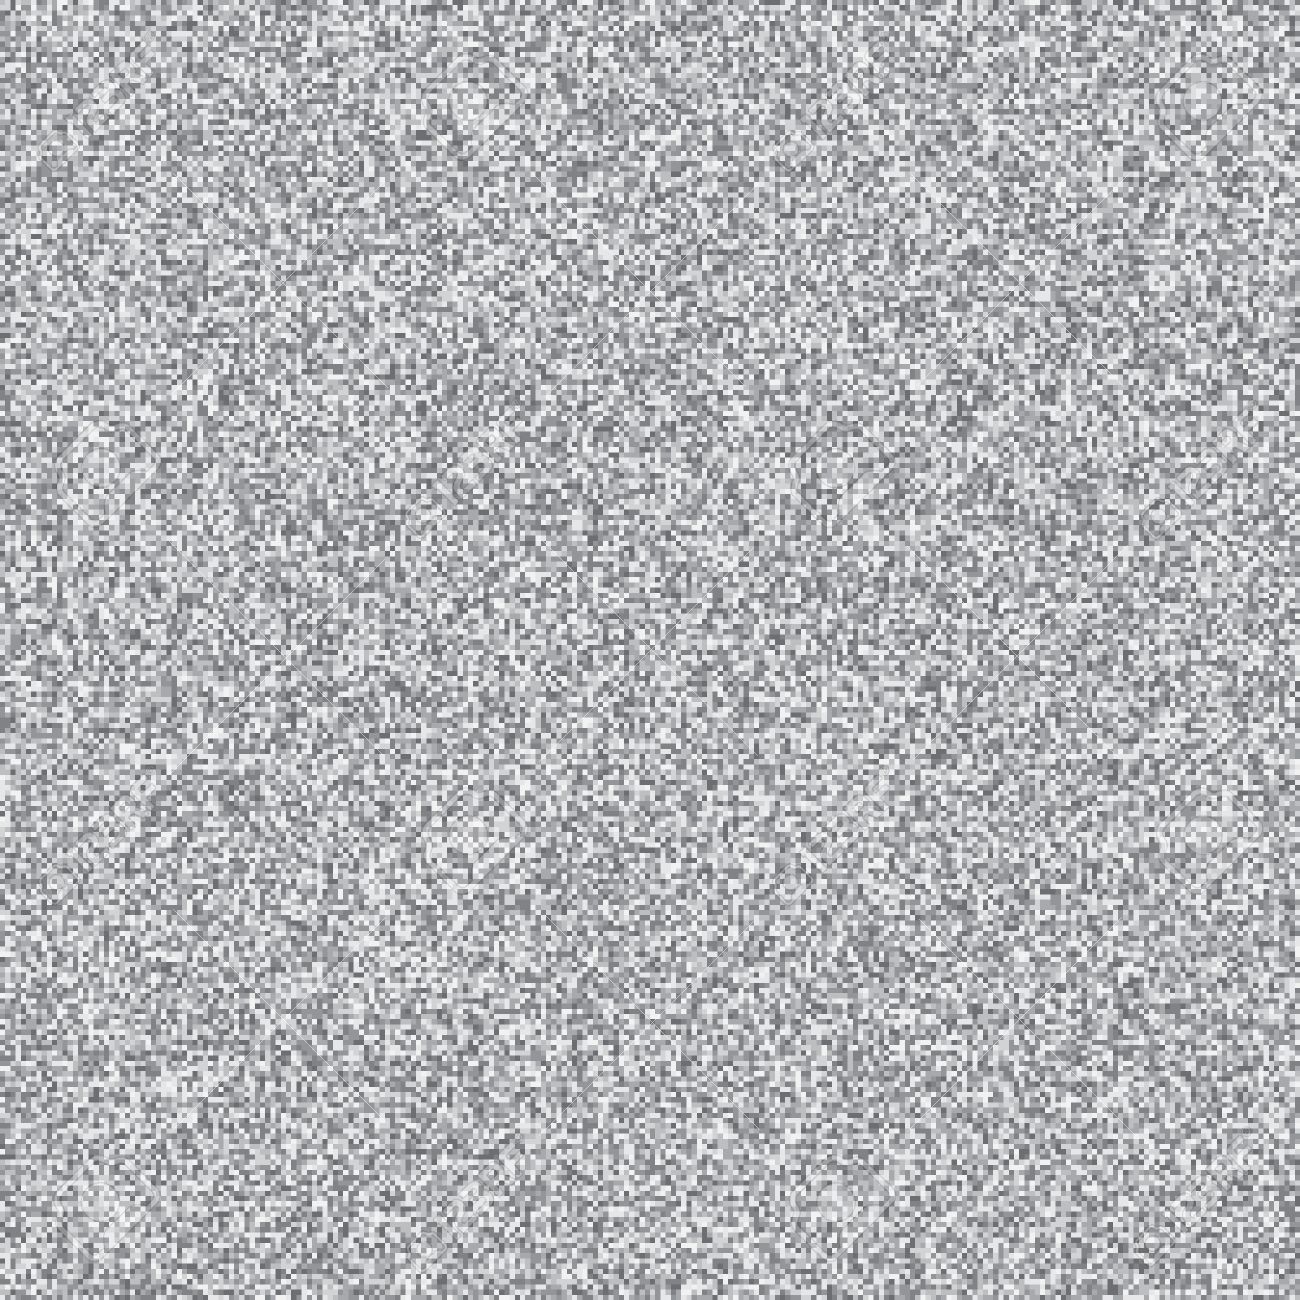 Bit Tv Interference Background Glith Grain Gray Pixel Screen